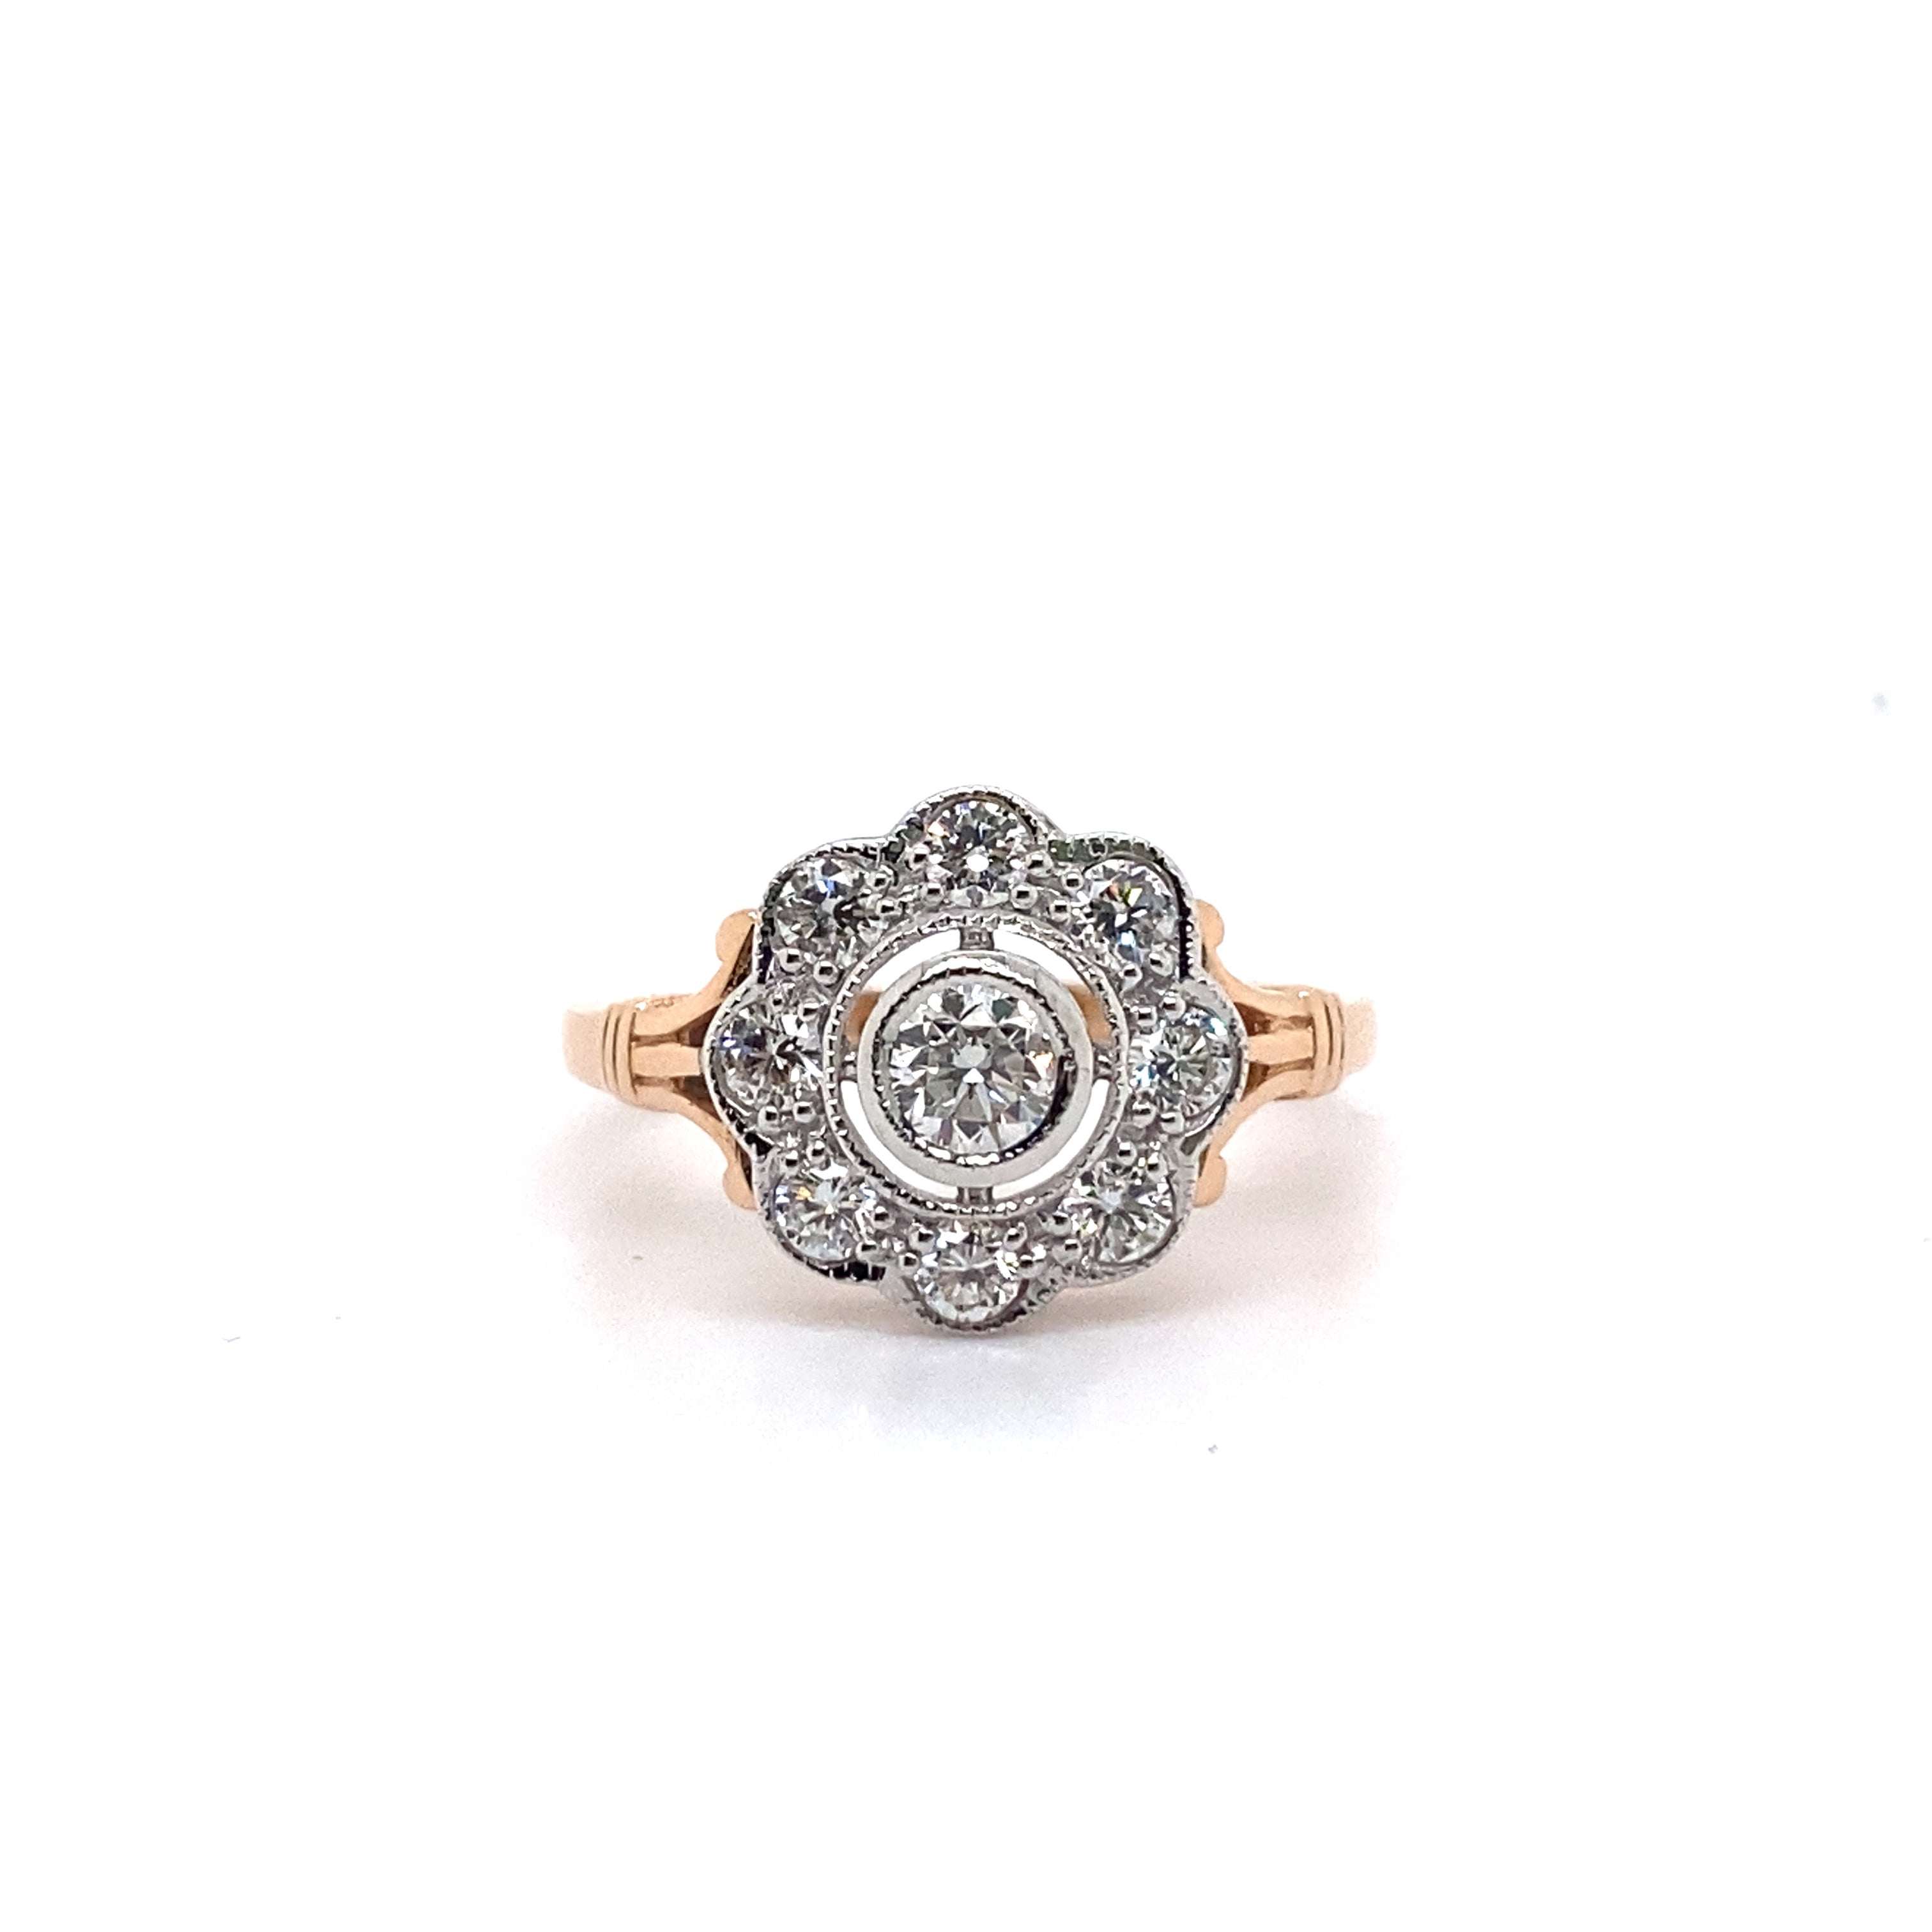 18ct rose gold cluster diamond ring.